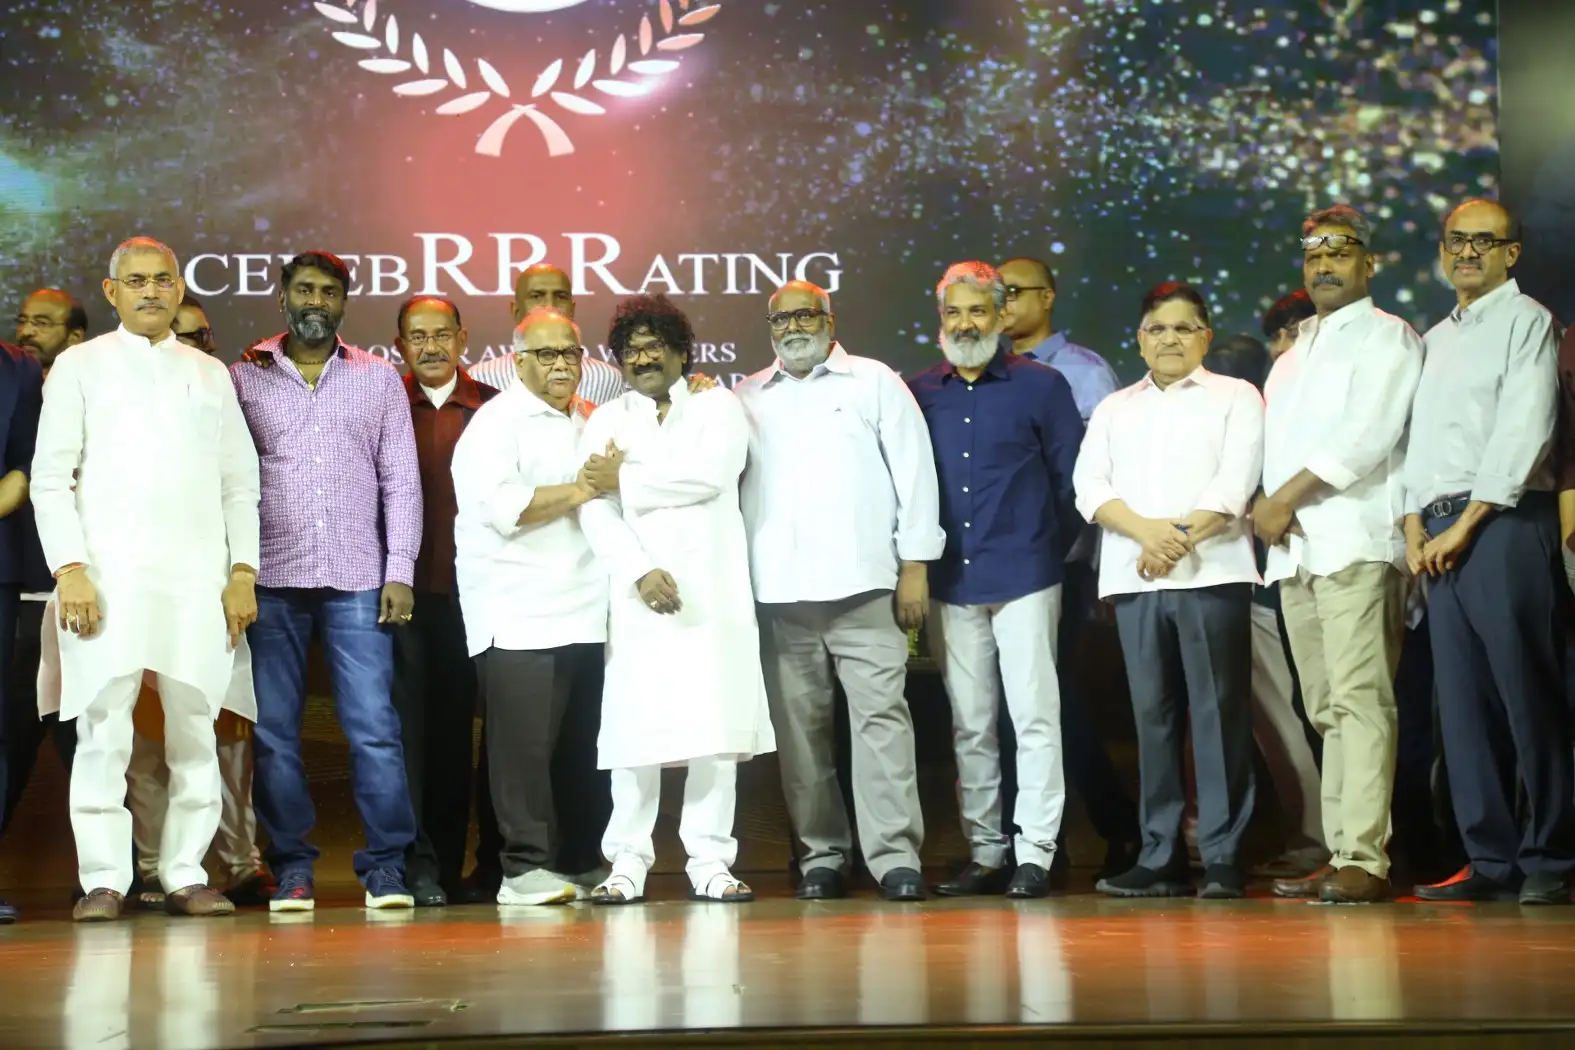 Tollywood Film Chamber felicitated oscar winners M M Keeravani Chandrabose